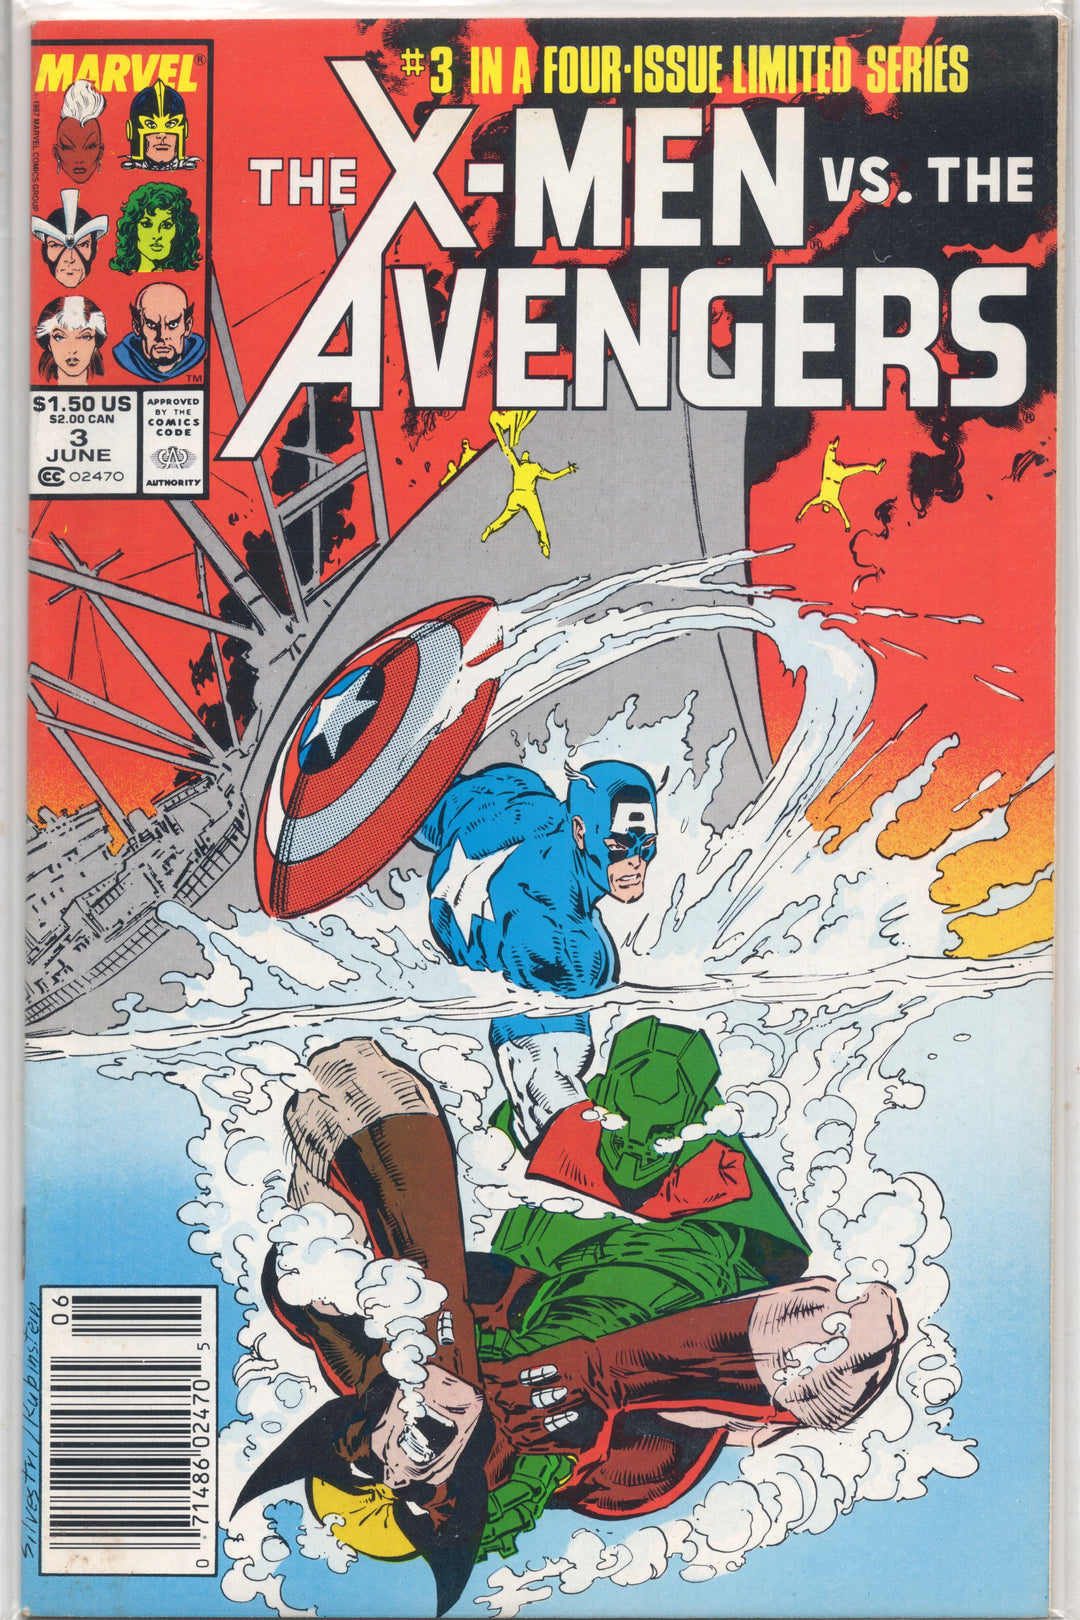 X-Men vs the Avengers: 1-4 complete, Newsstand set